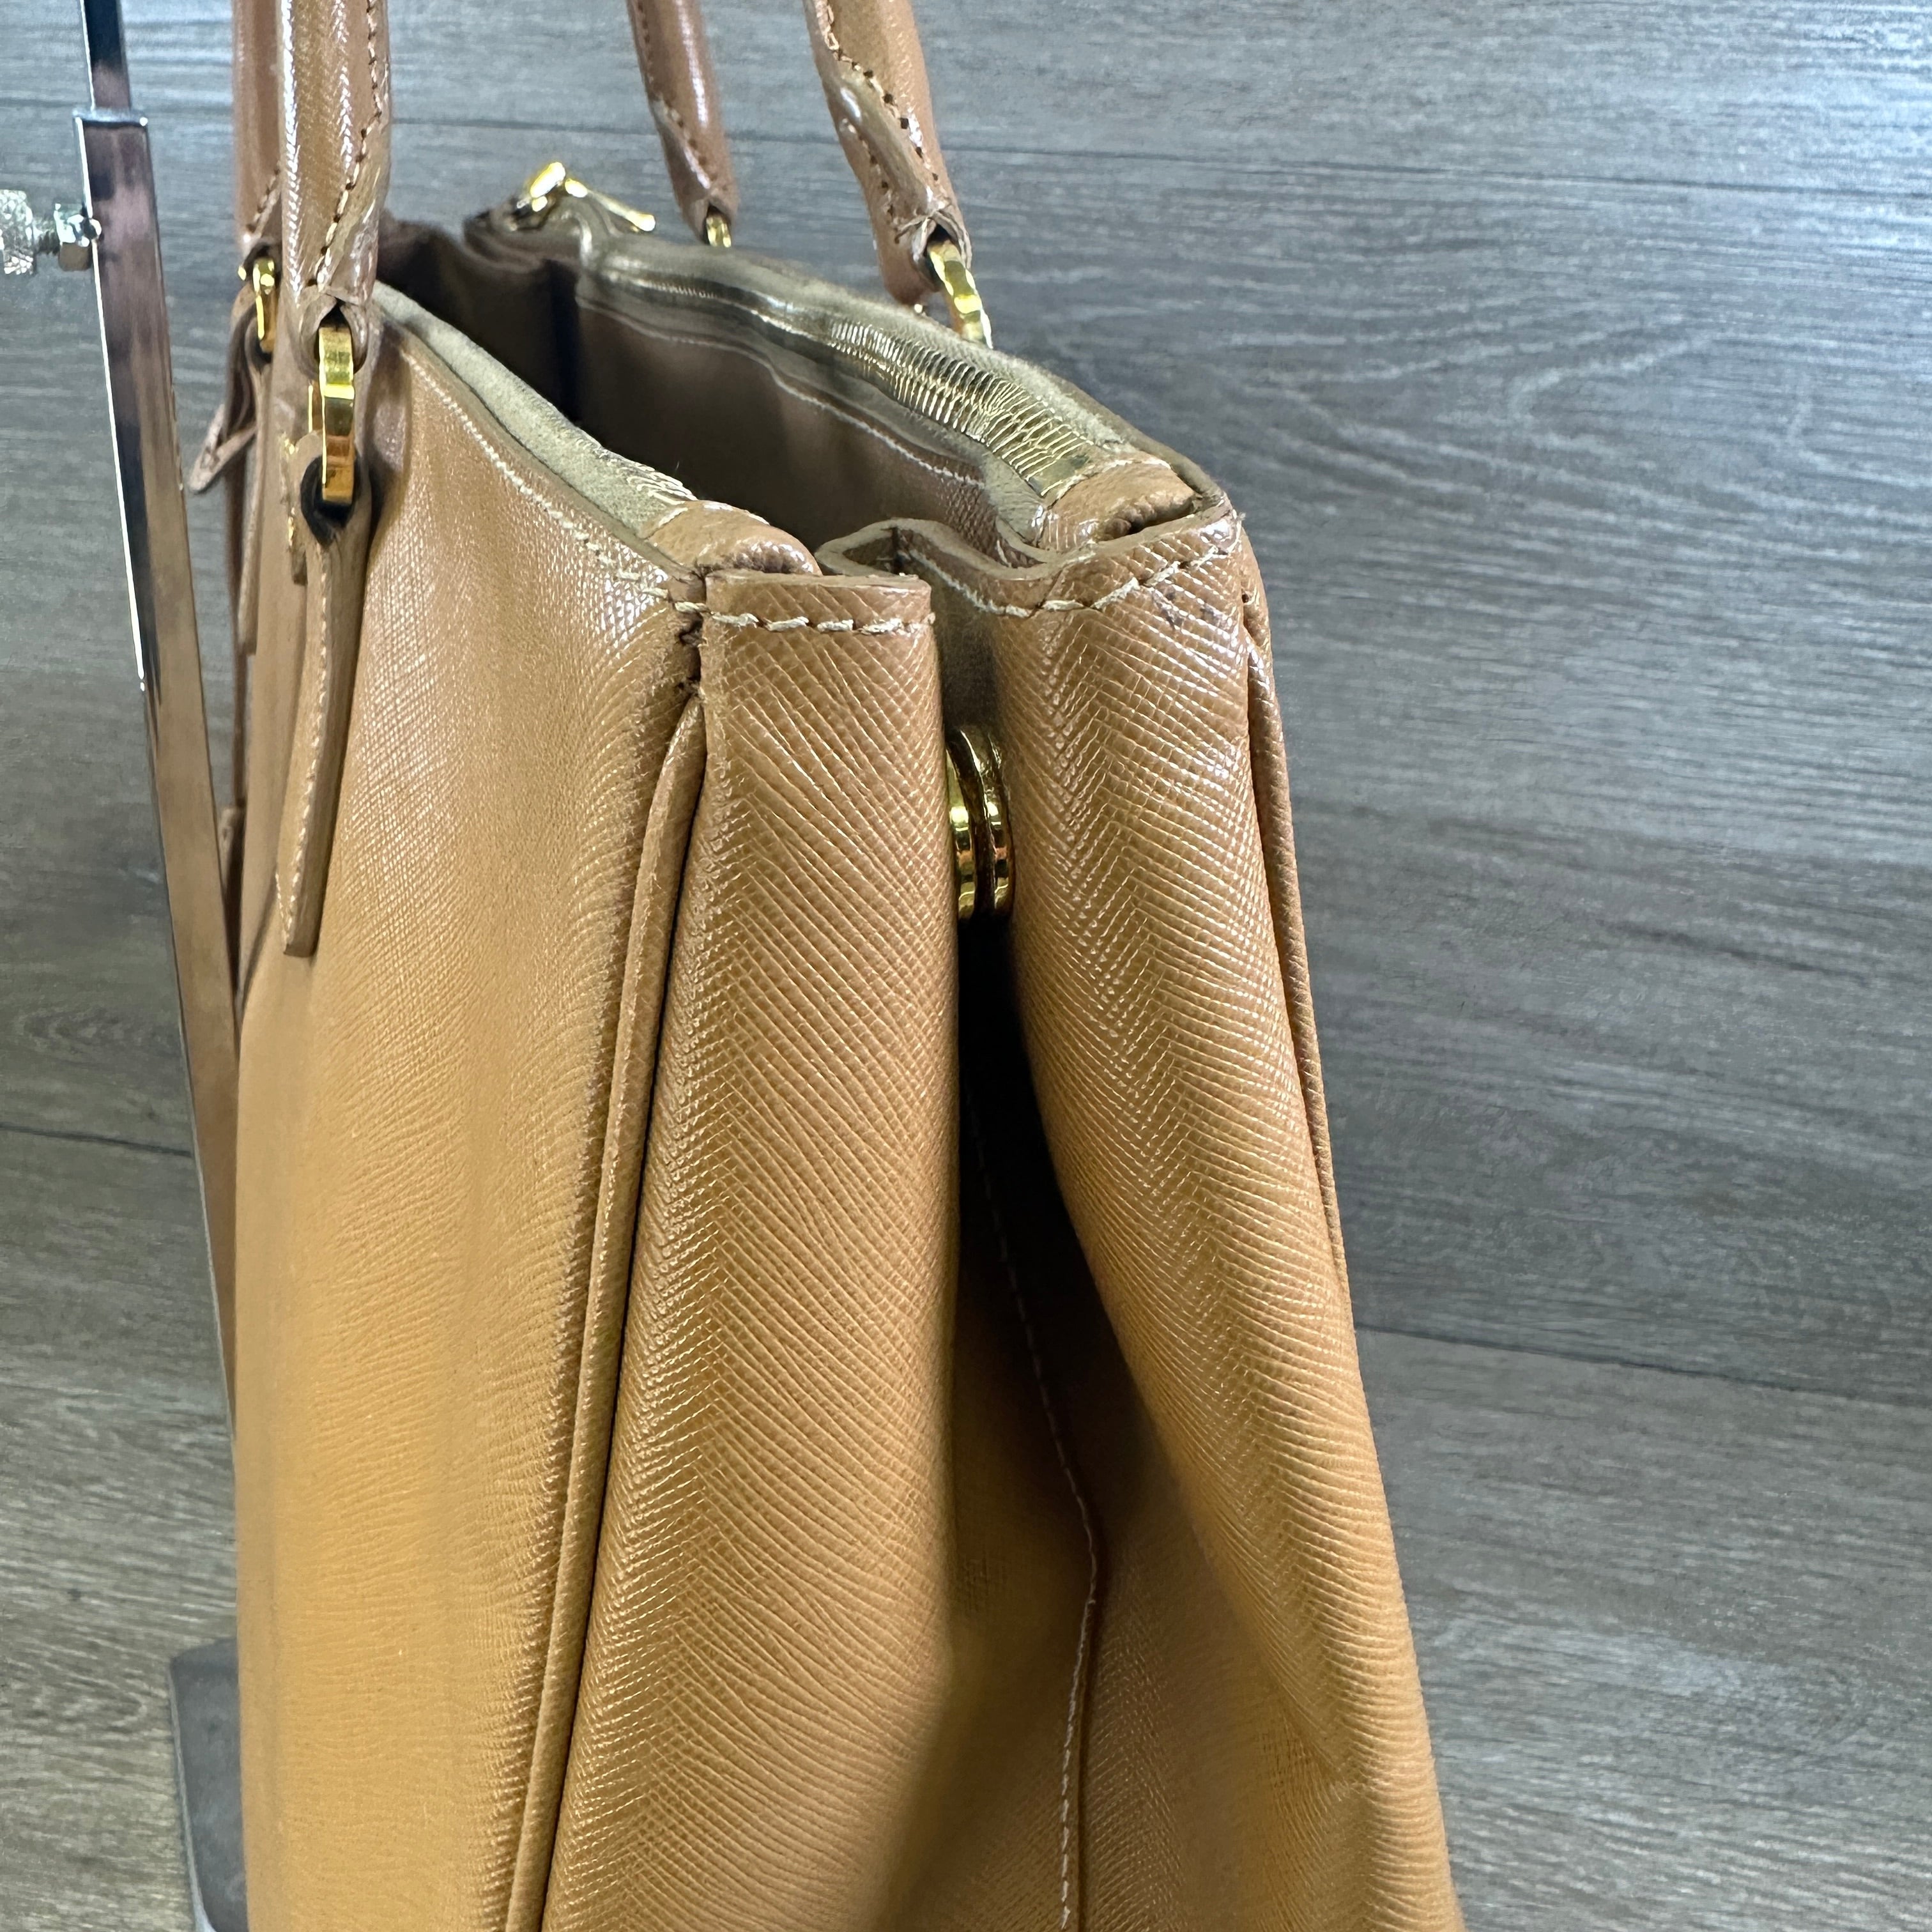 PRADA: Galleria bag in saffiano leather - Black